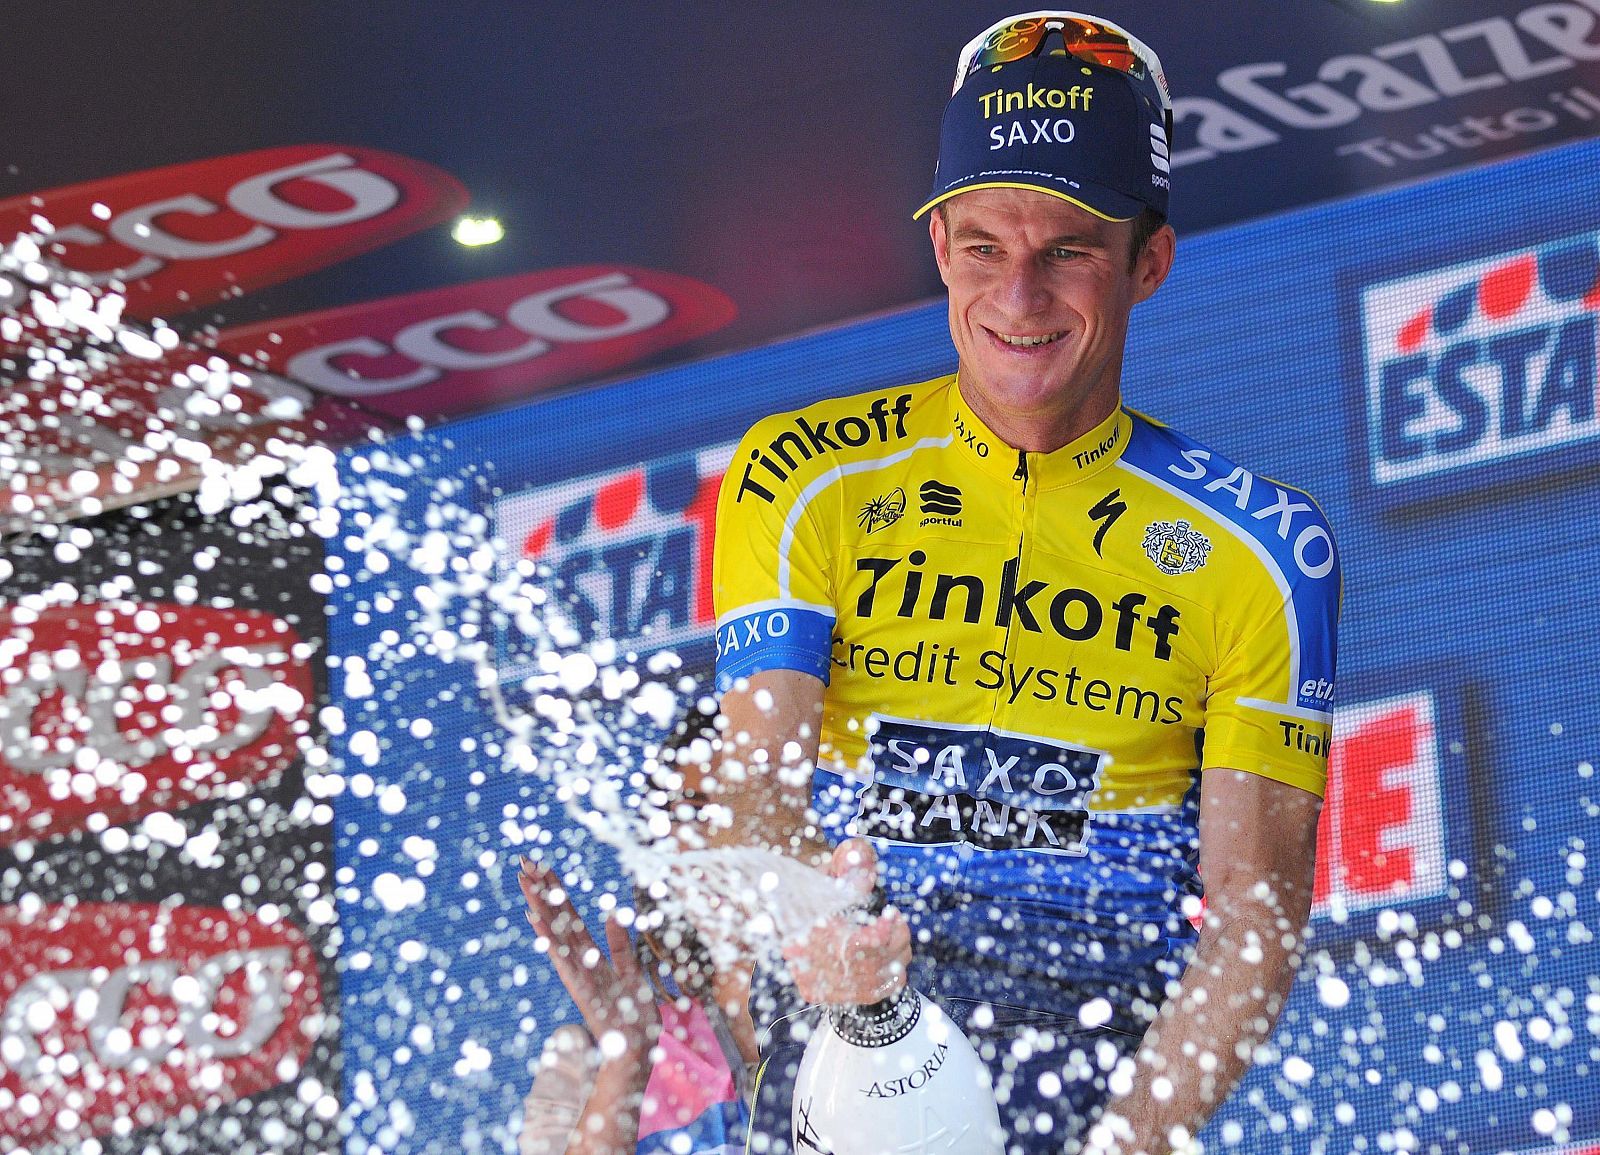 El ciclista australiano del Tinkoff Saxo, Michael Rogers, celebra la victoria en el podio.